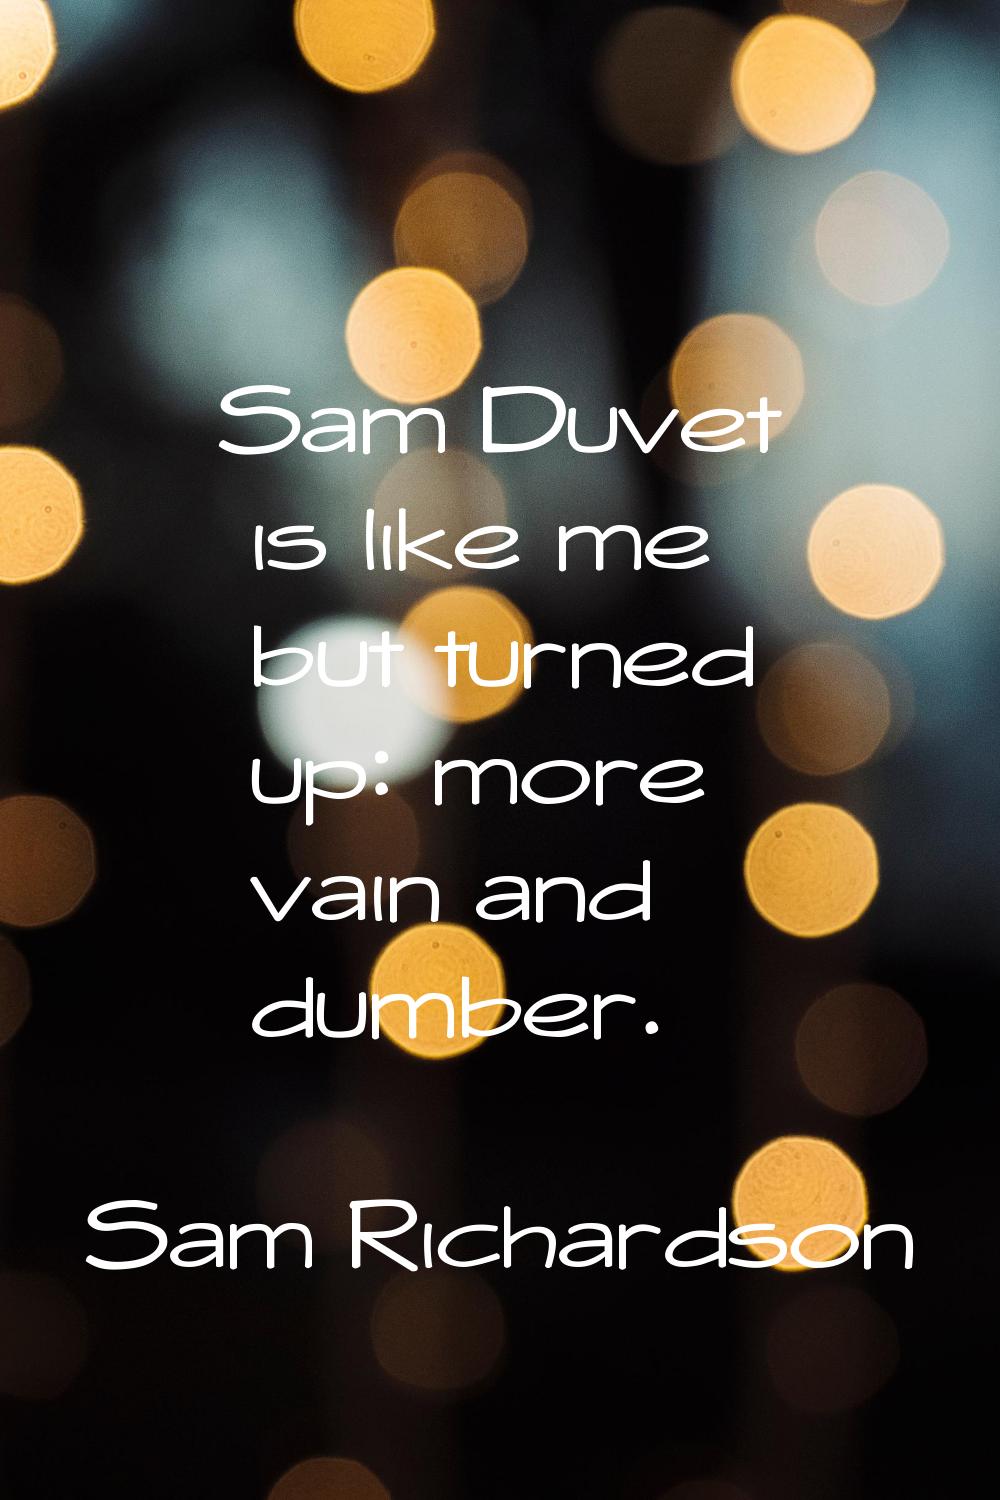 Sam Duvet is like me but turned up: more vain and dumber.